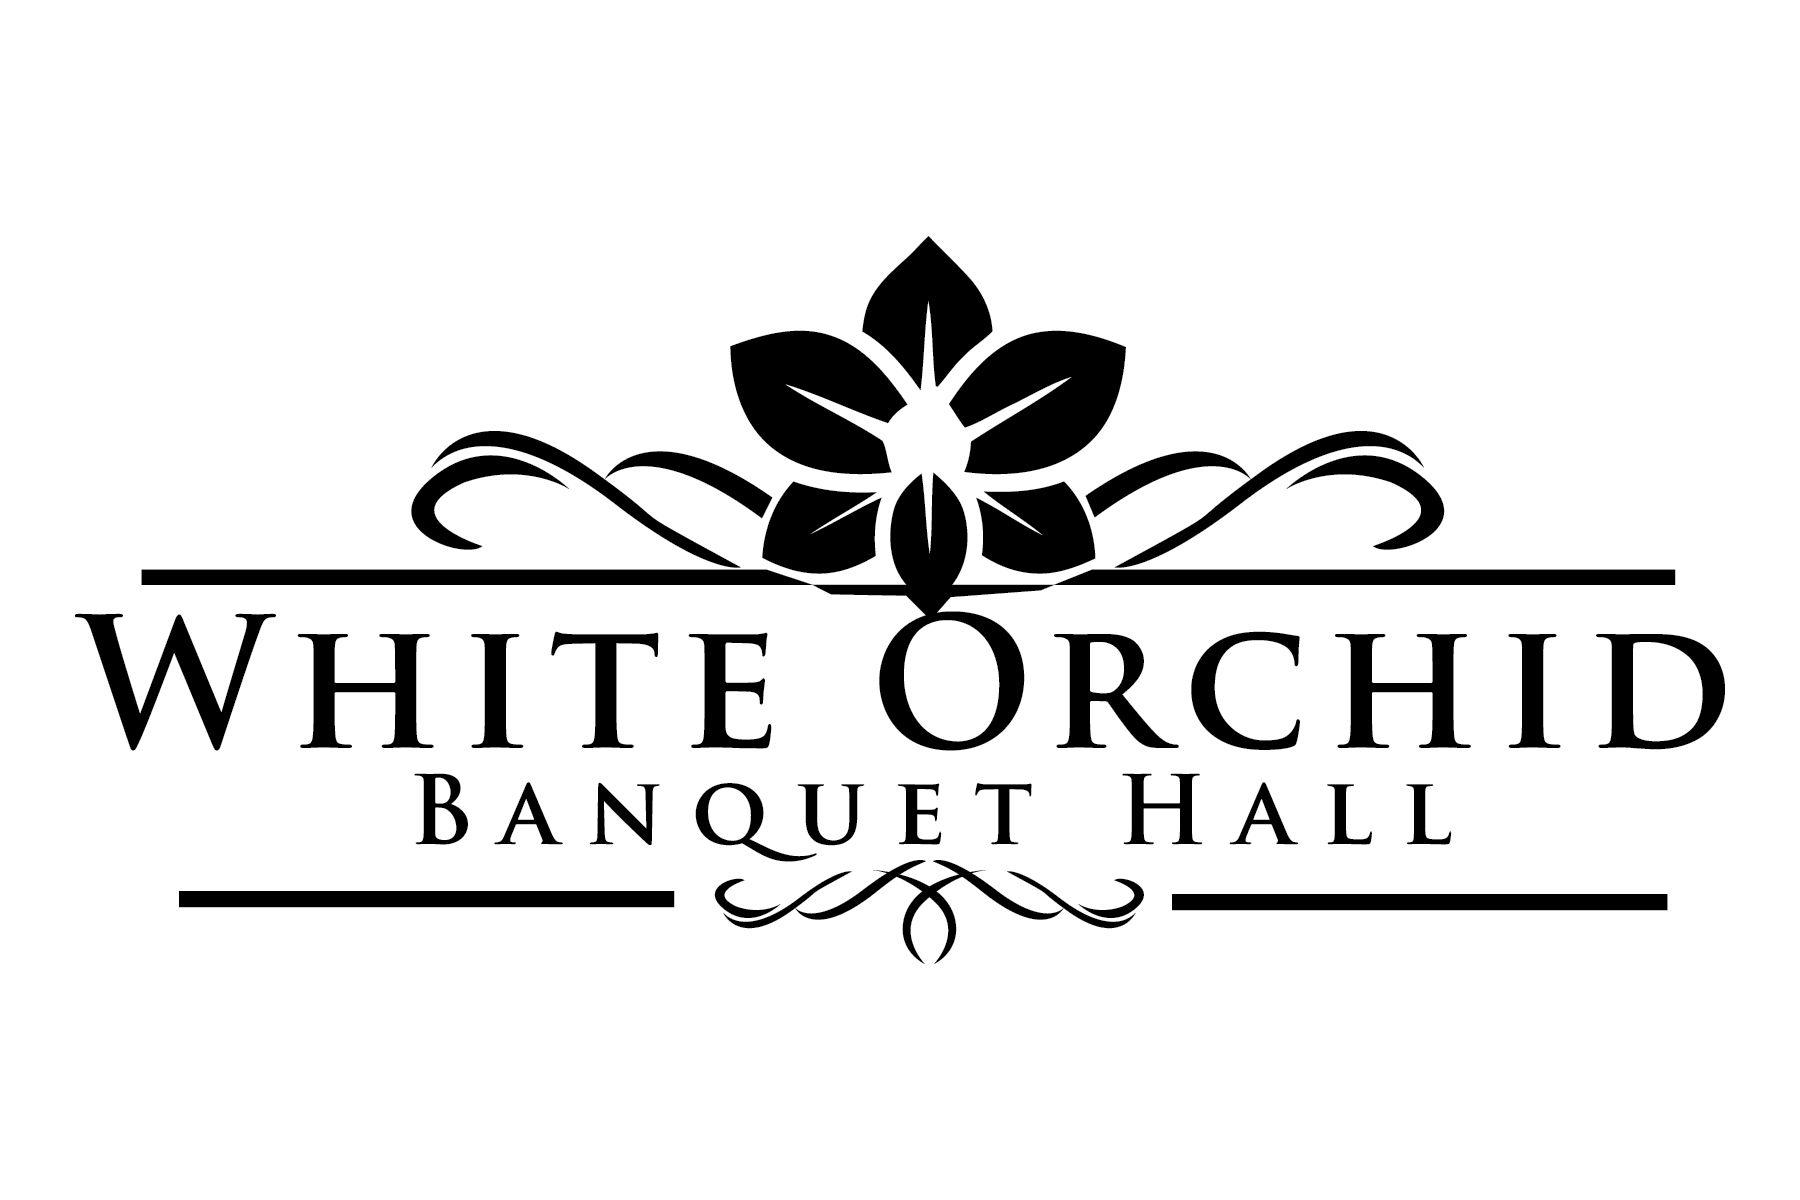 Hall Logo - Punjabi American Media - White Orchid Banquet Hall Logo